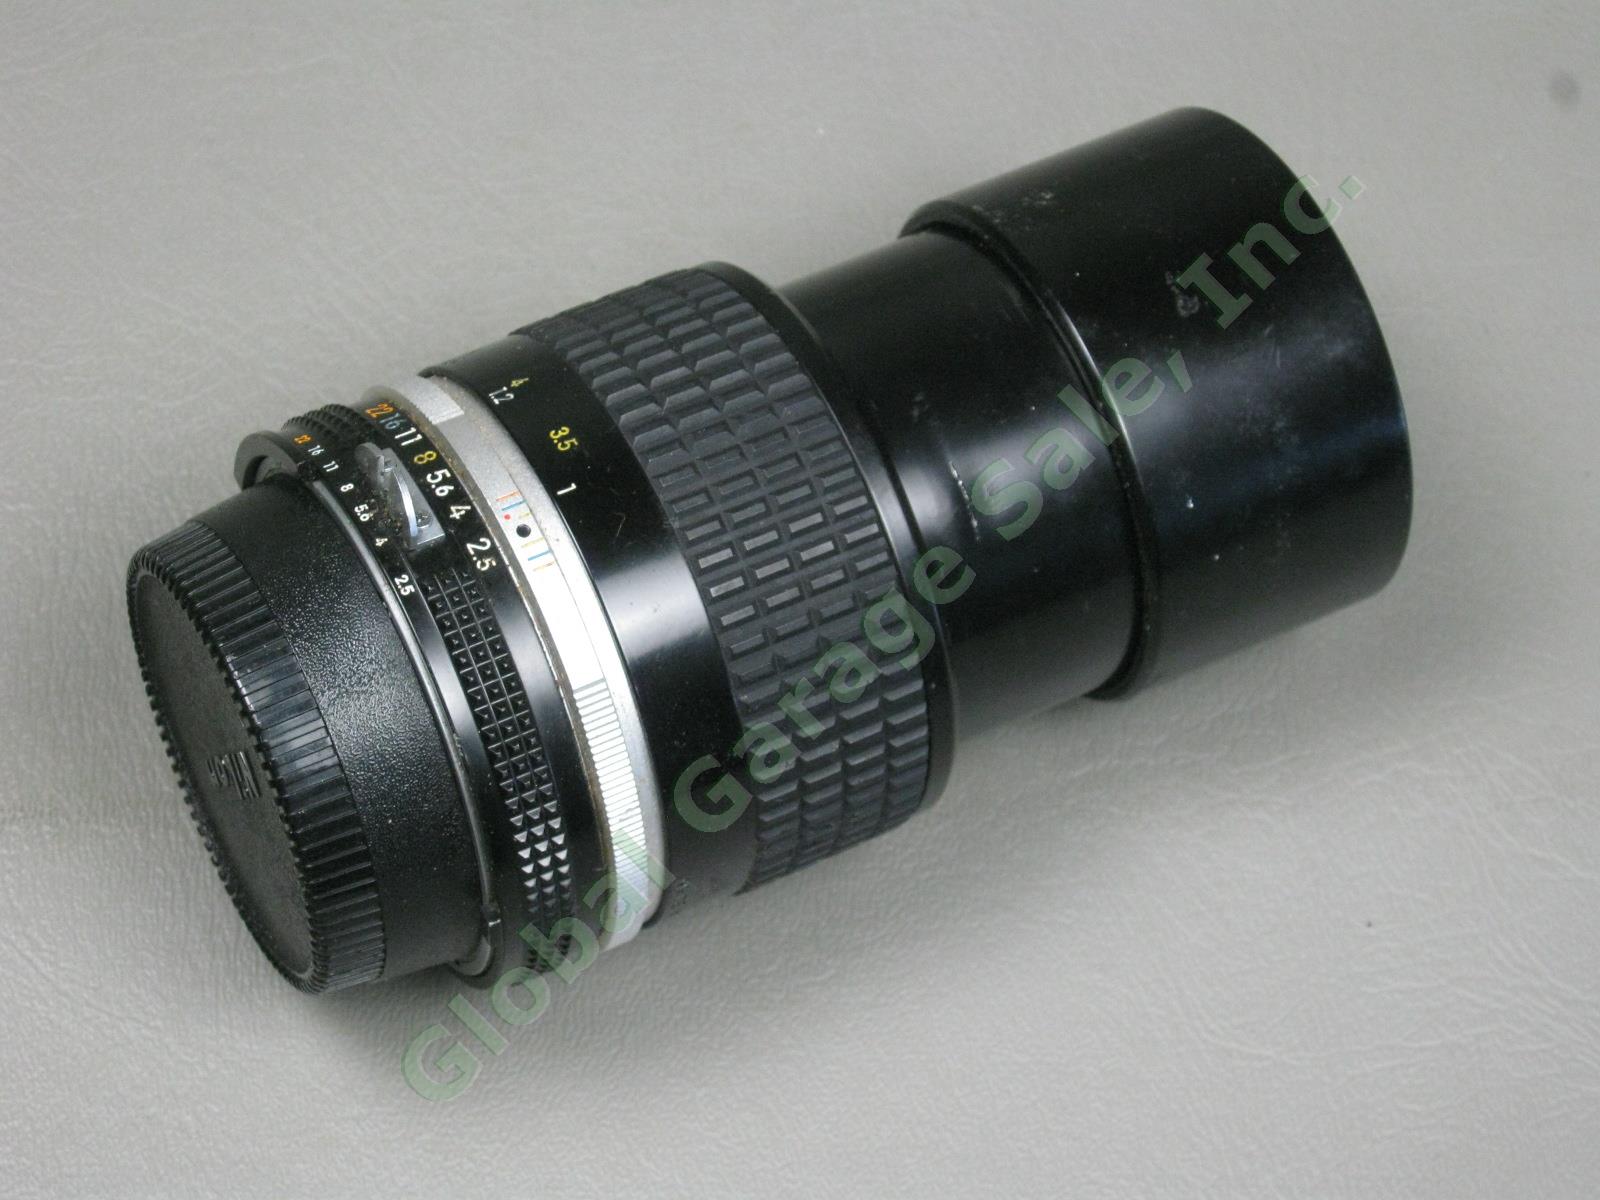 Nikon Nikkor 105mm 1:2.5 f/2.5 Telephoto Camera Lens No Reserve Price! 7